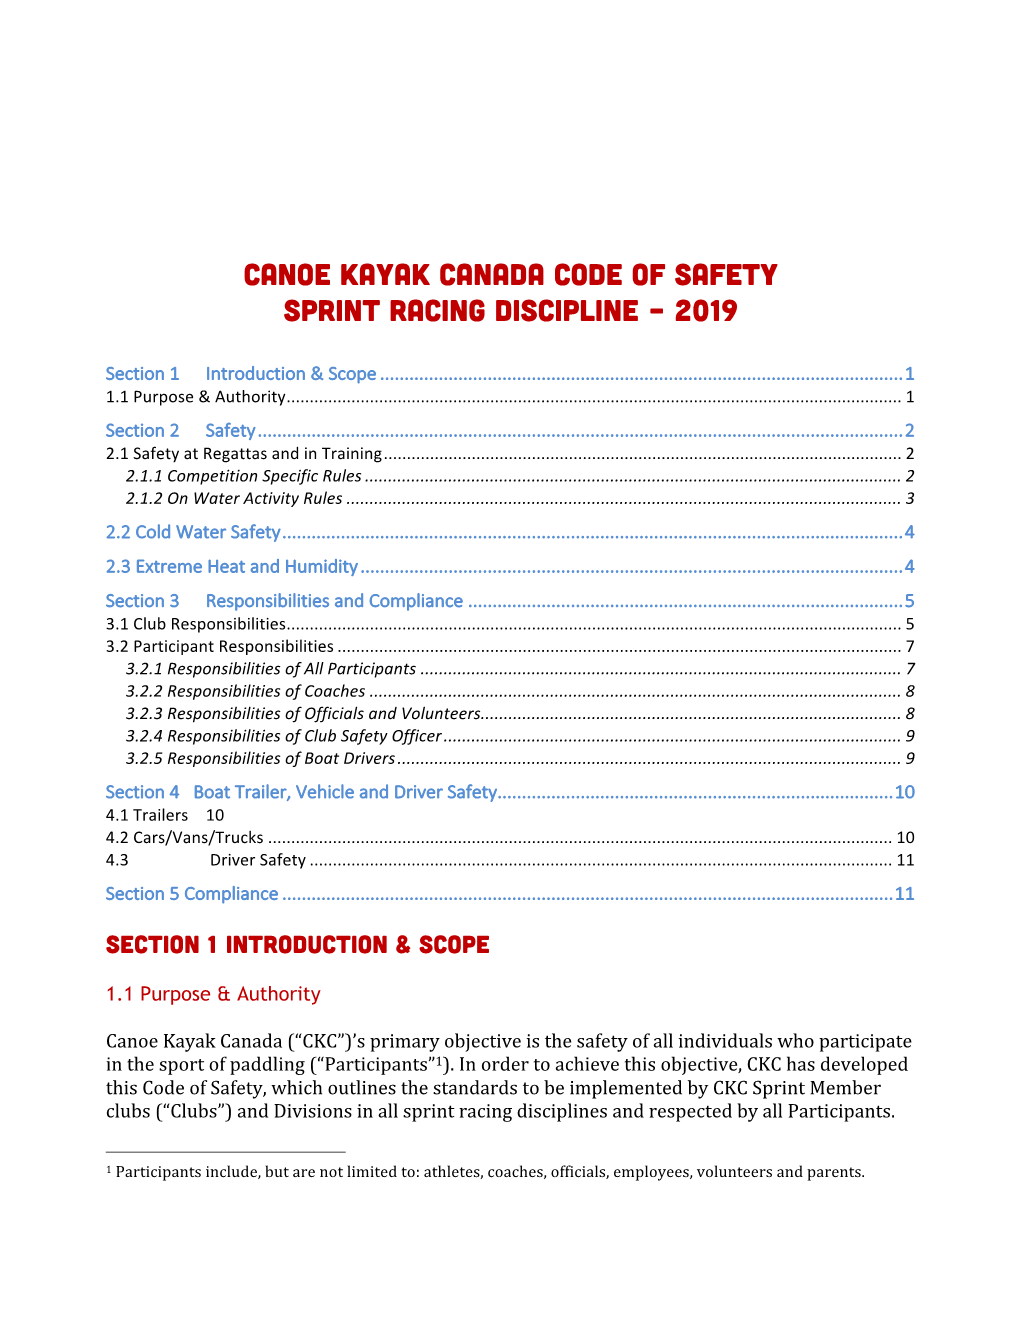 CKC Sprint Code of Safety